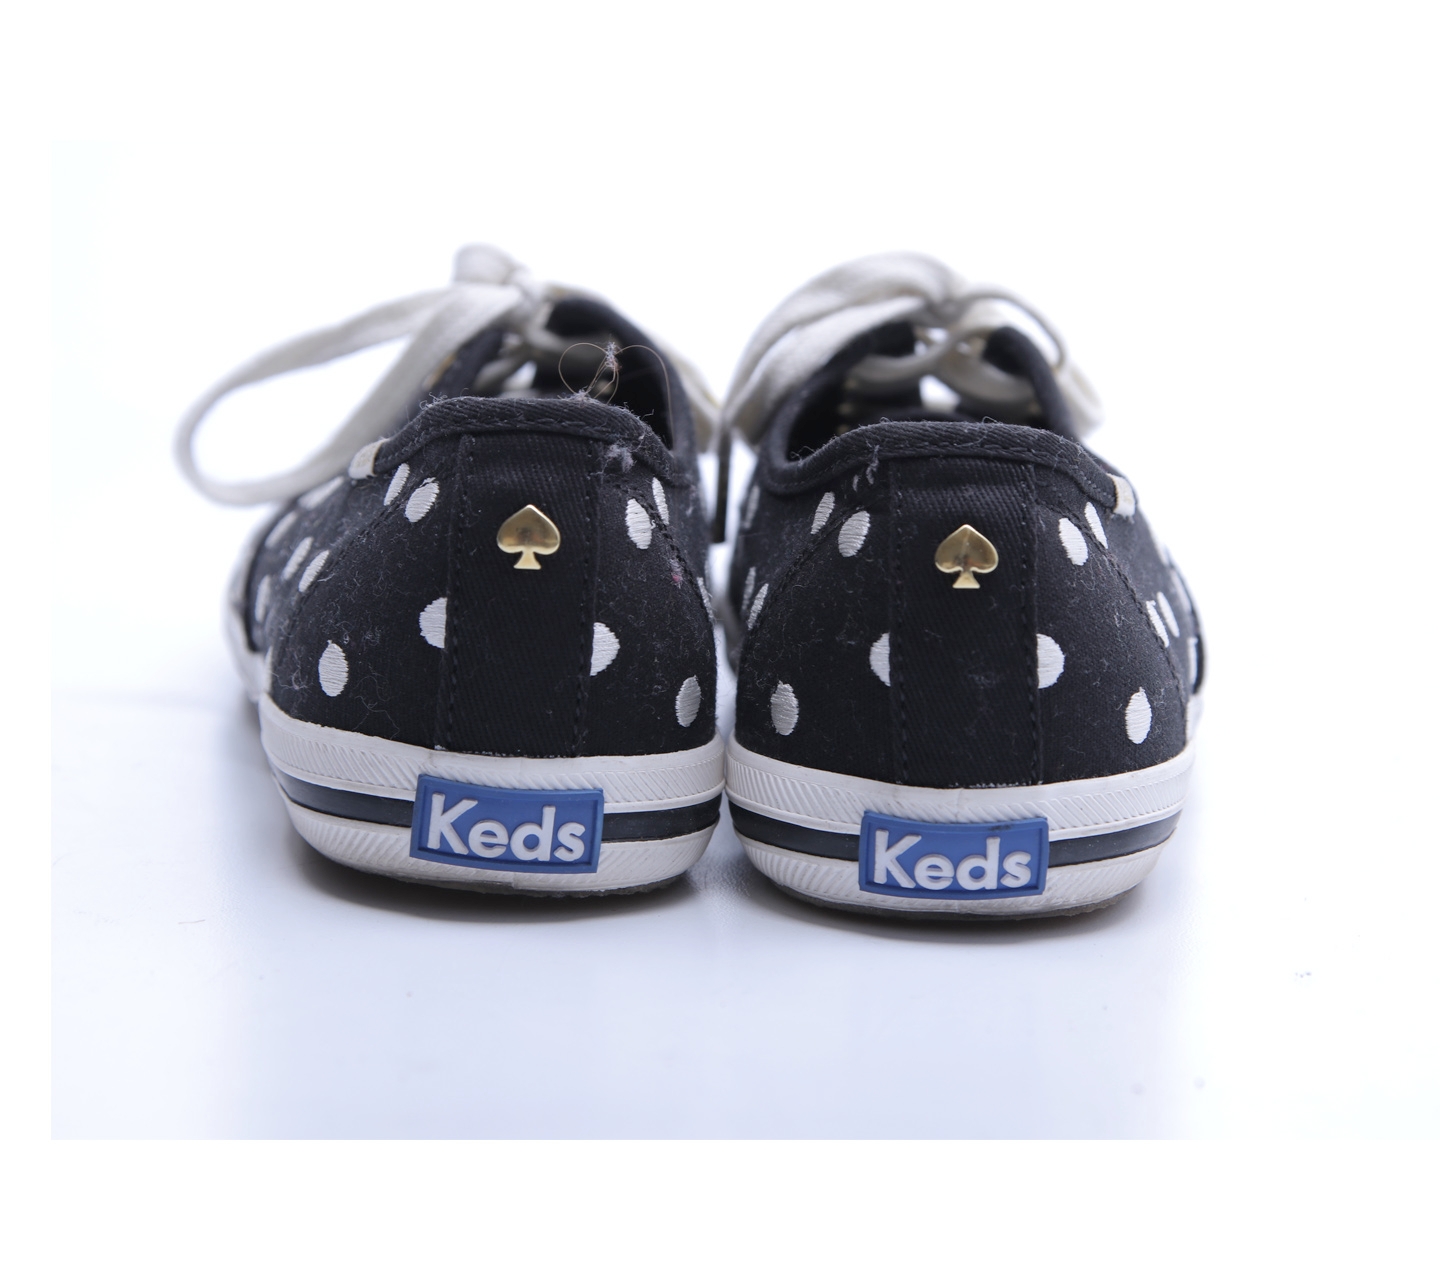 Keds For Kate Spade Black & White Polkadot Sneakers